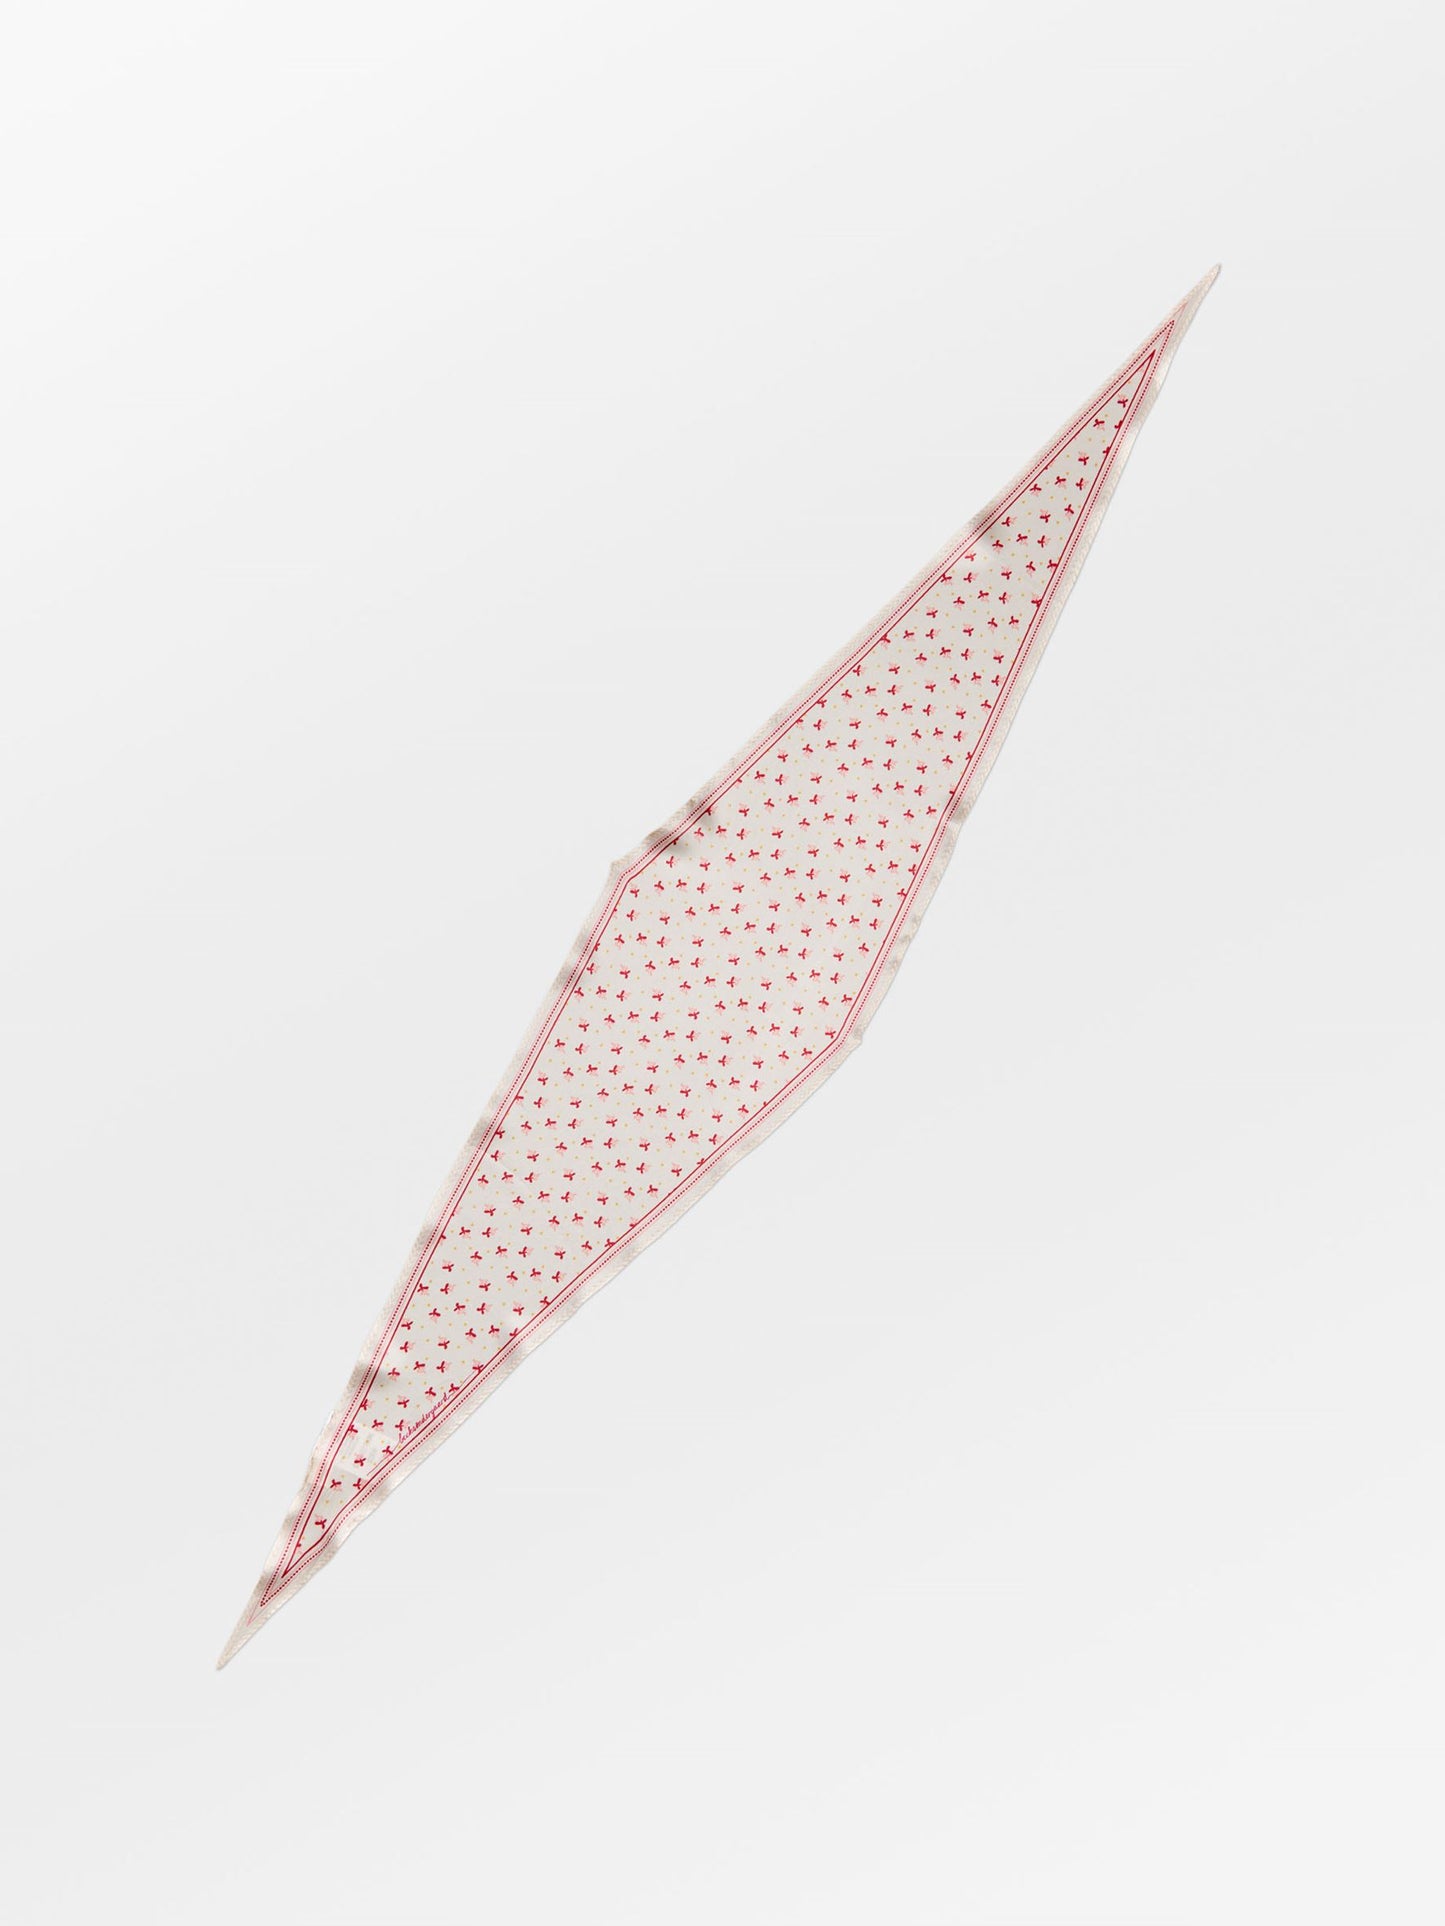 Becksöndergaard, Halia Diamond Scarf - Pink Icing, scarves, scarves, scarves